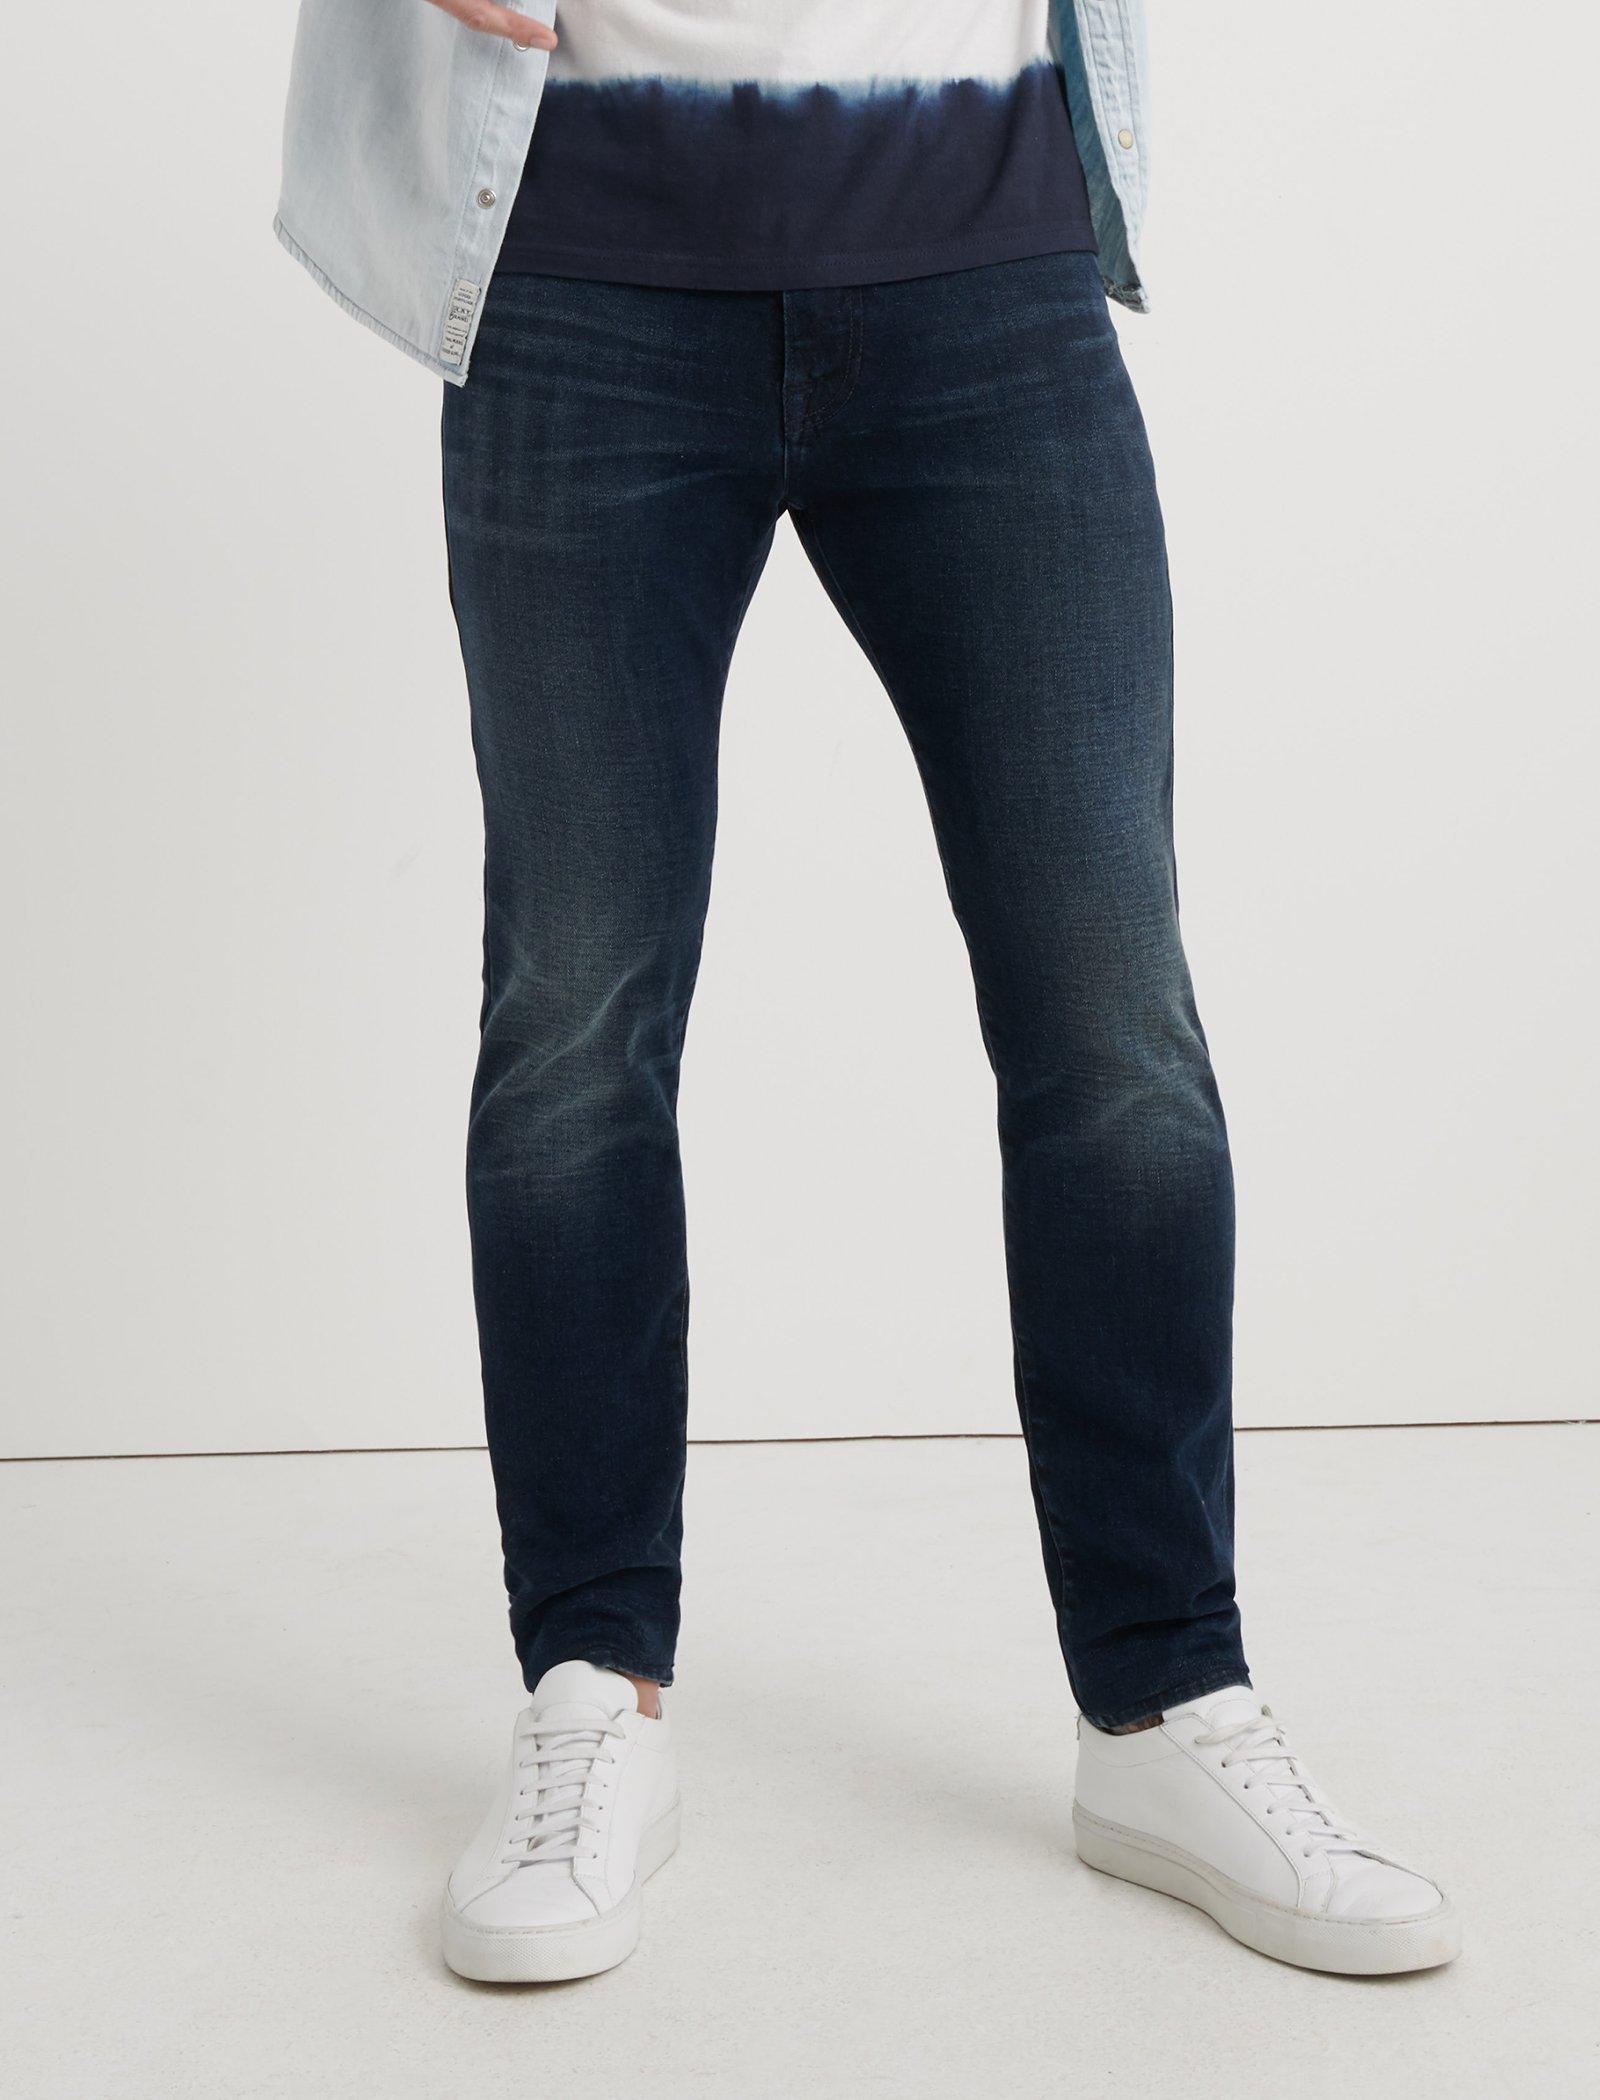 slim tapered jeans mens